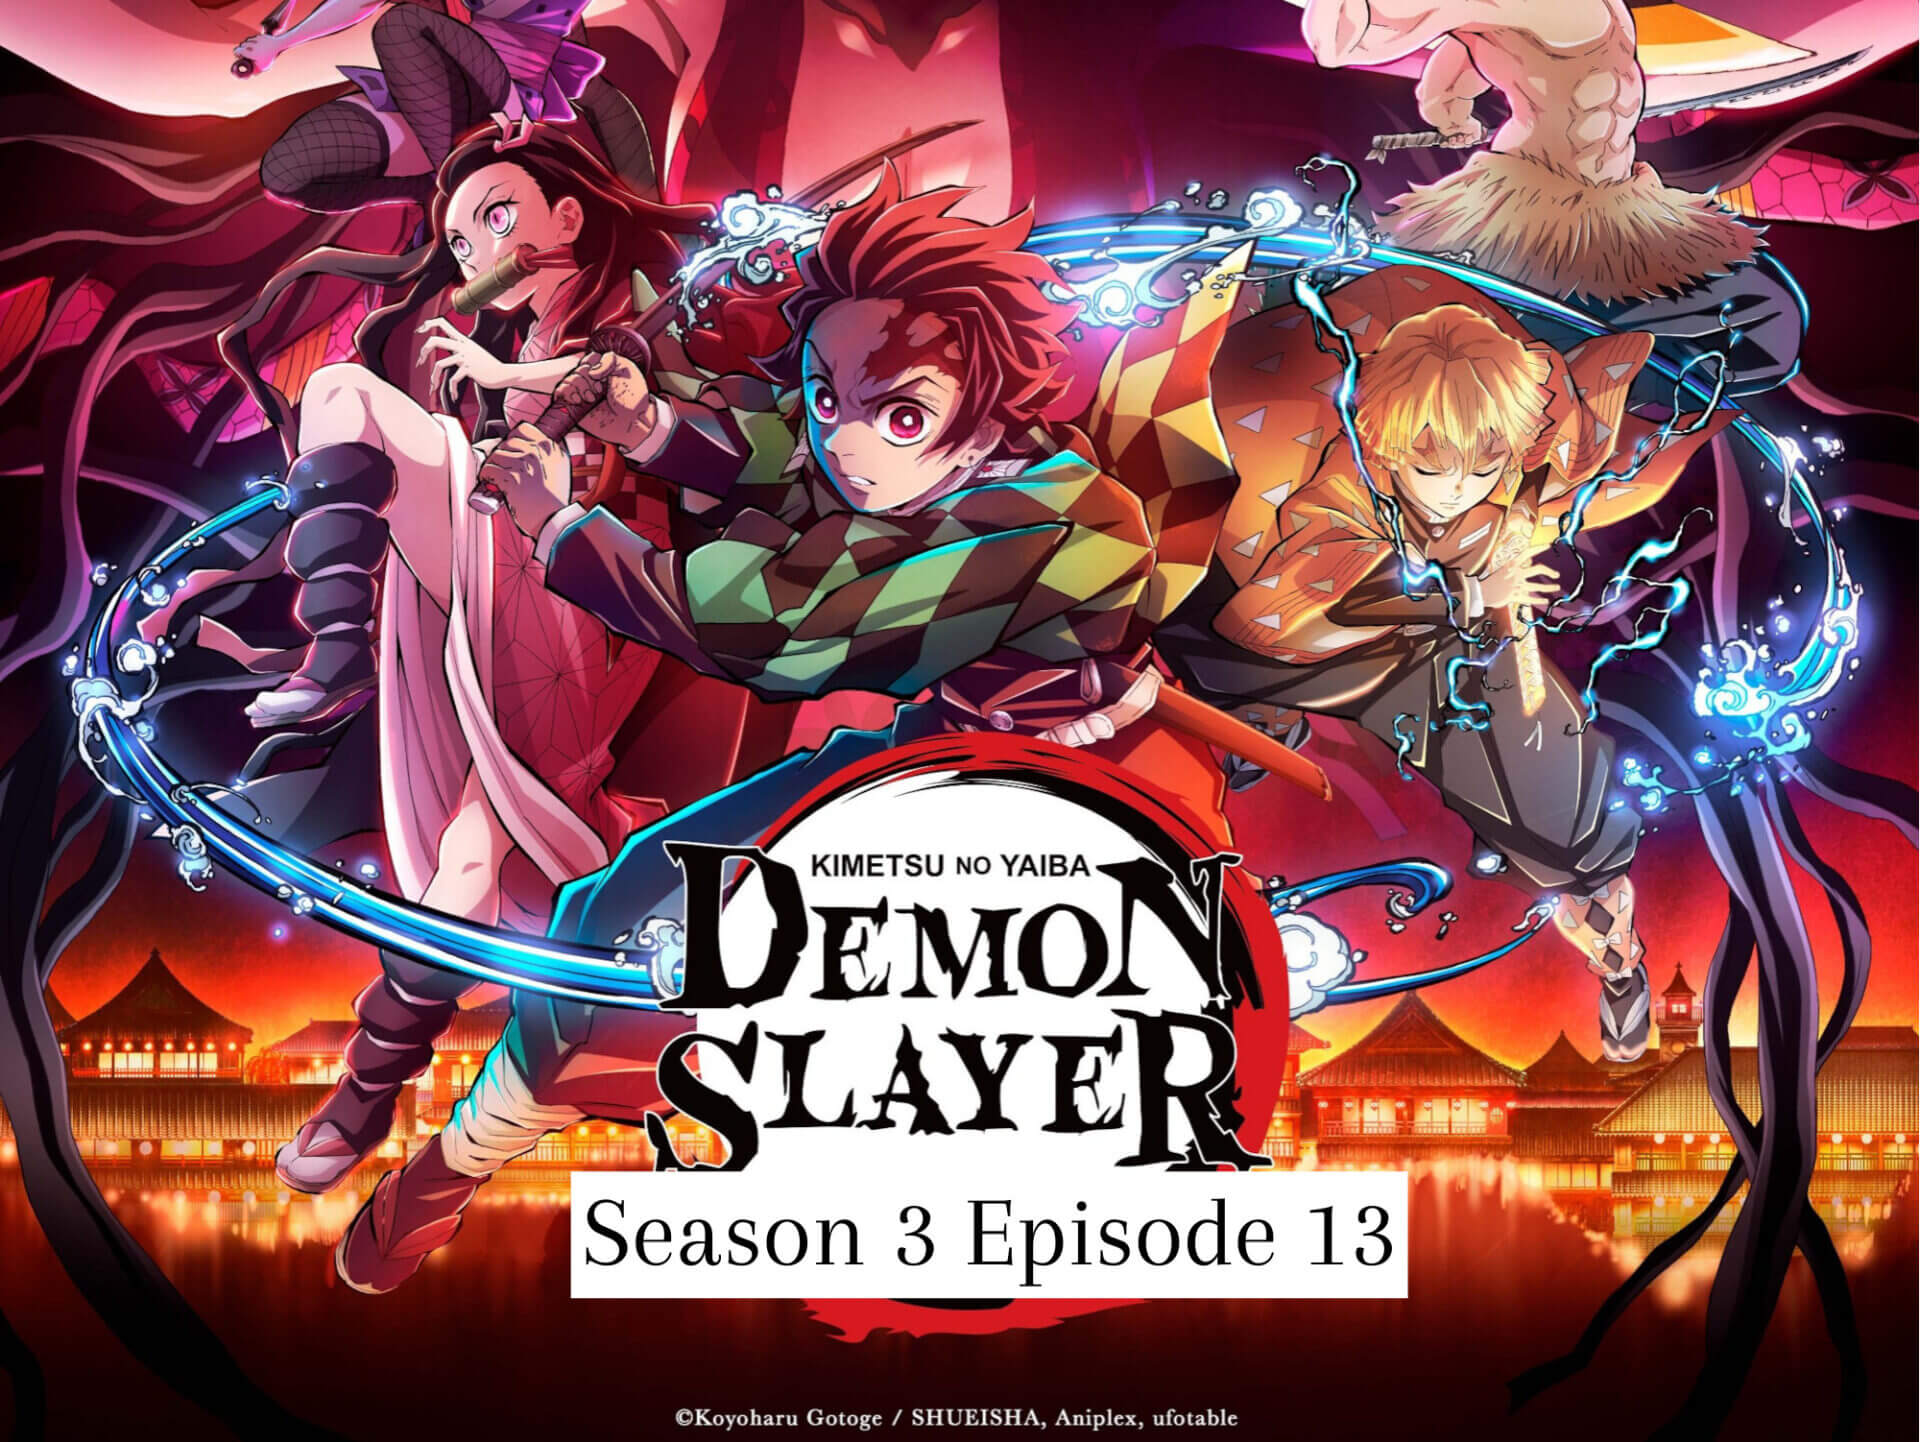 Demon Slayer Season 3 Episode 13 release date